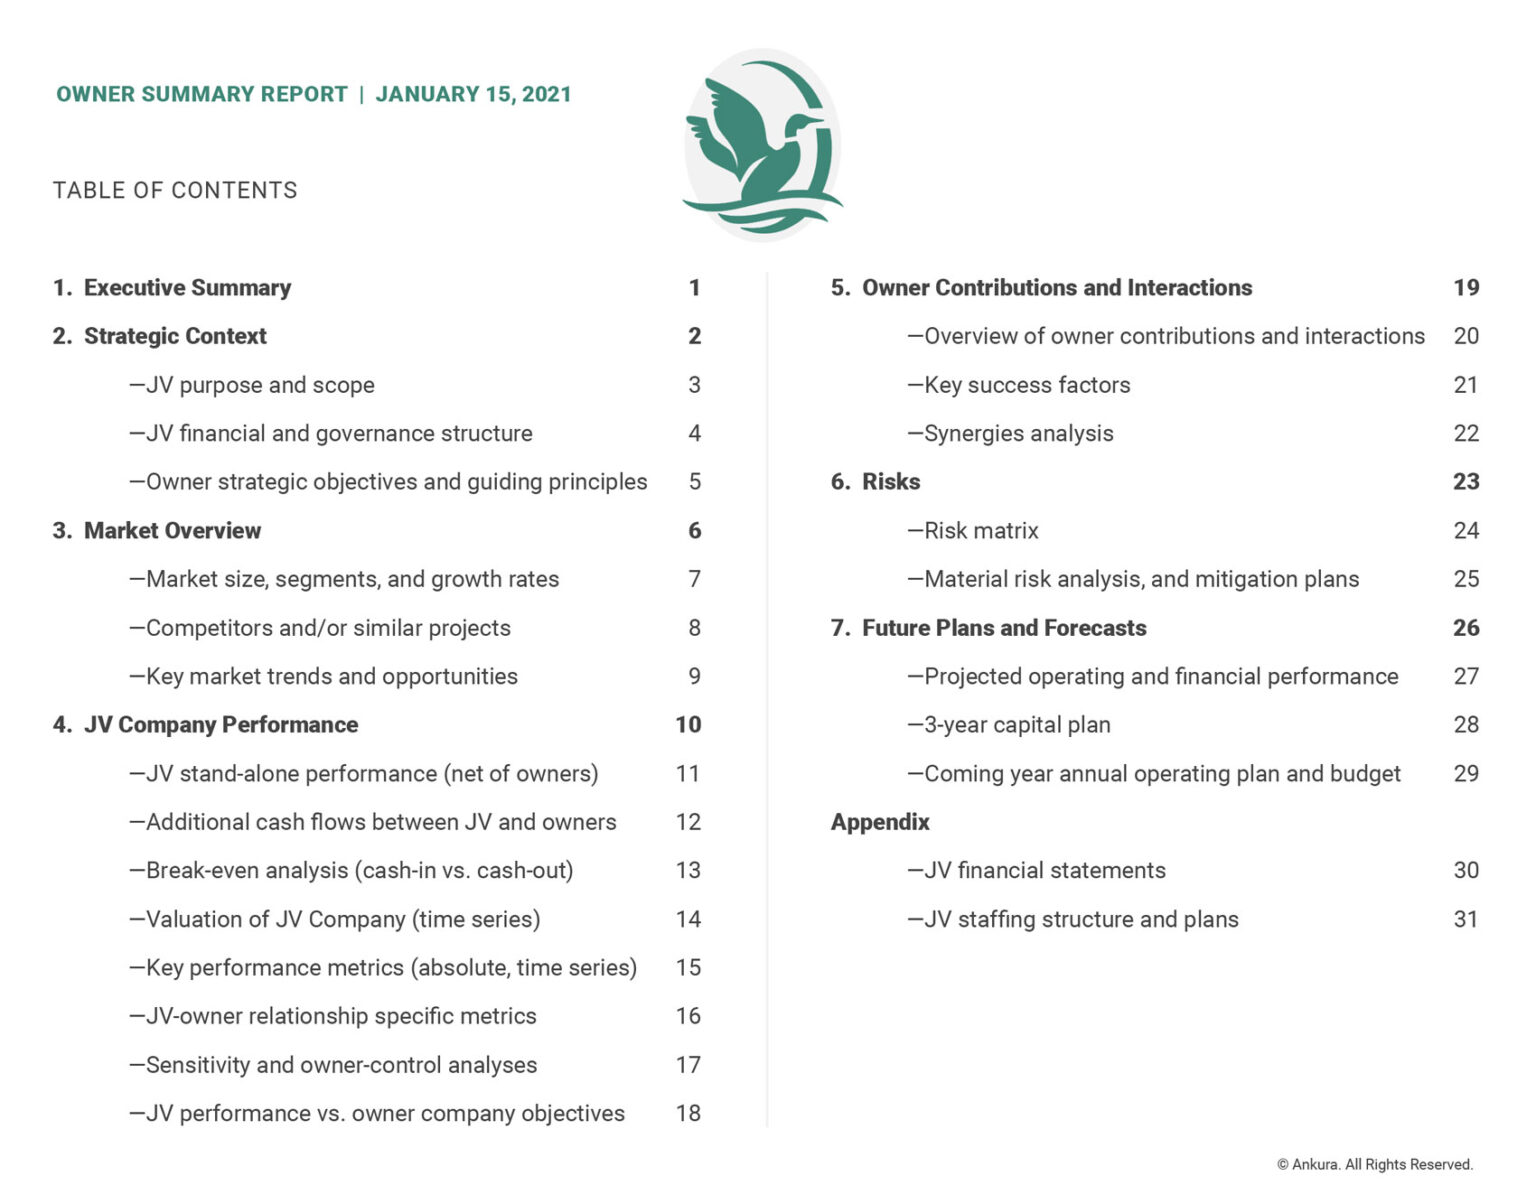 Exhibit 6: Investor Quality Summary of The JV